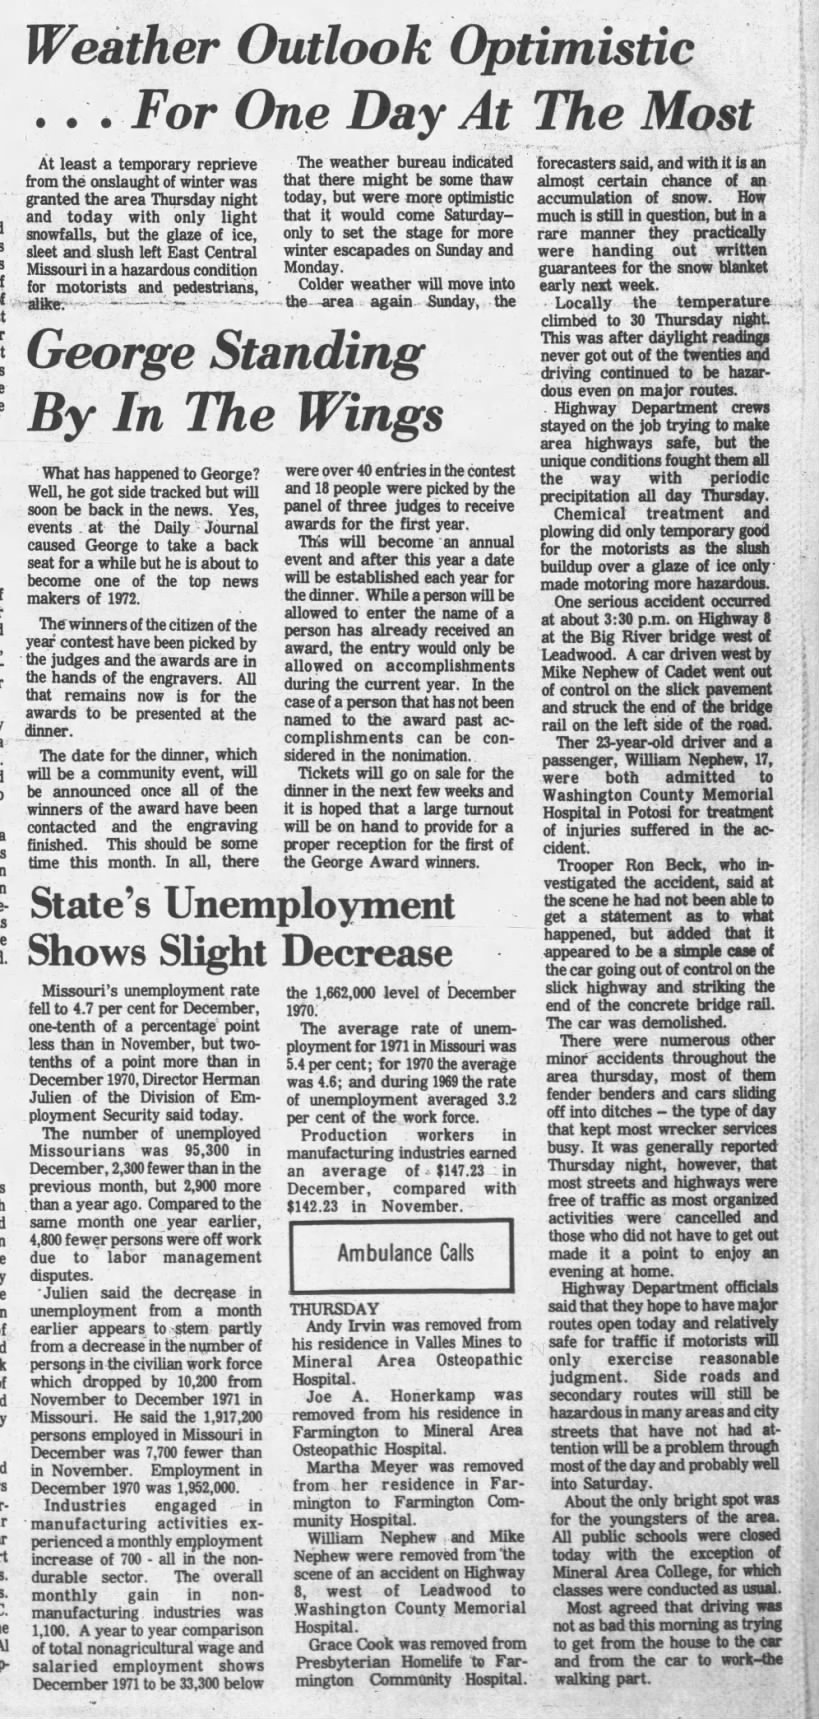 The Daily Journal (Flat River, Missouri) 28 Jan 1972, Fri. Page 1